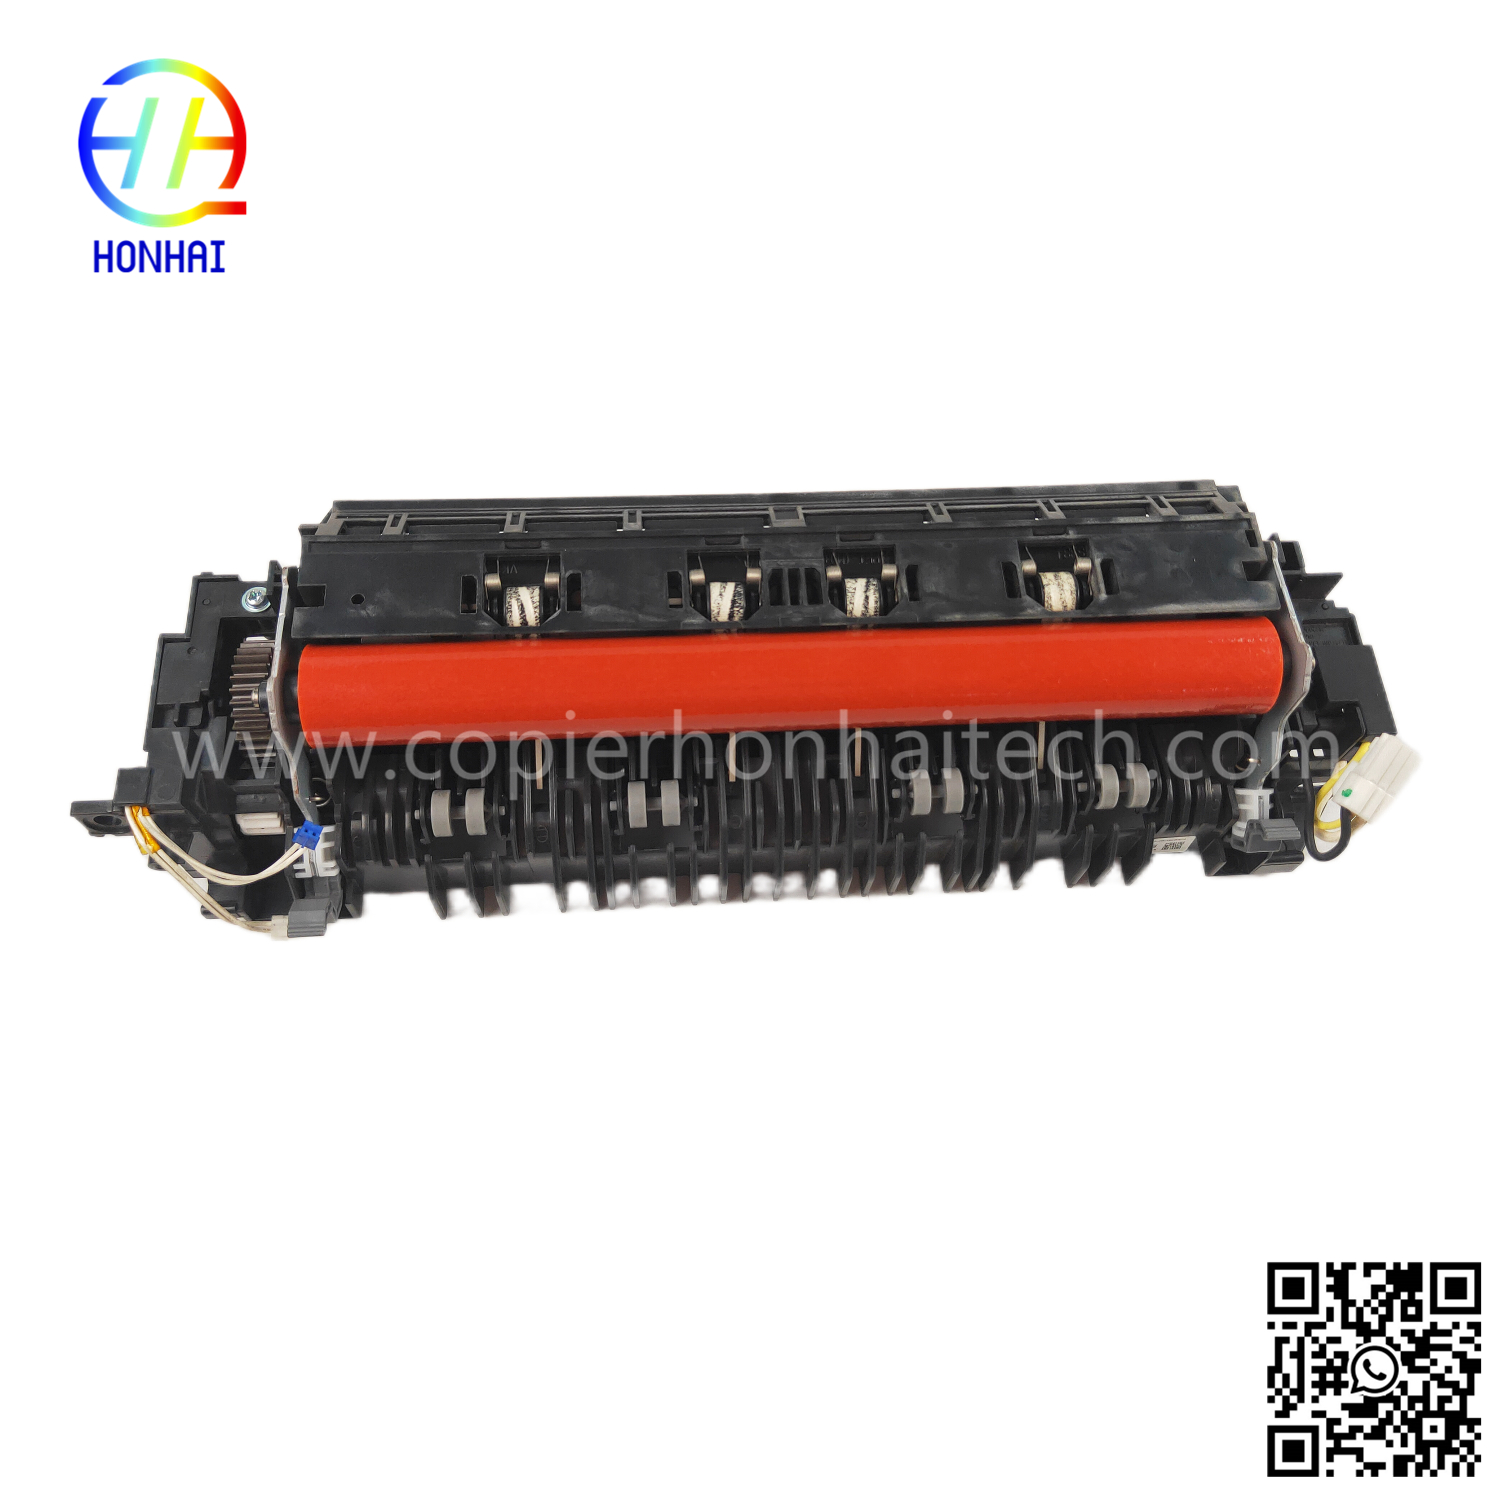 https://www.copierhonhaitech.com/fuser-unit-220v-for-brother-mfc-l3750cdw-mfc-l3770cdw-fuser-assembly-product/